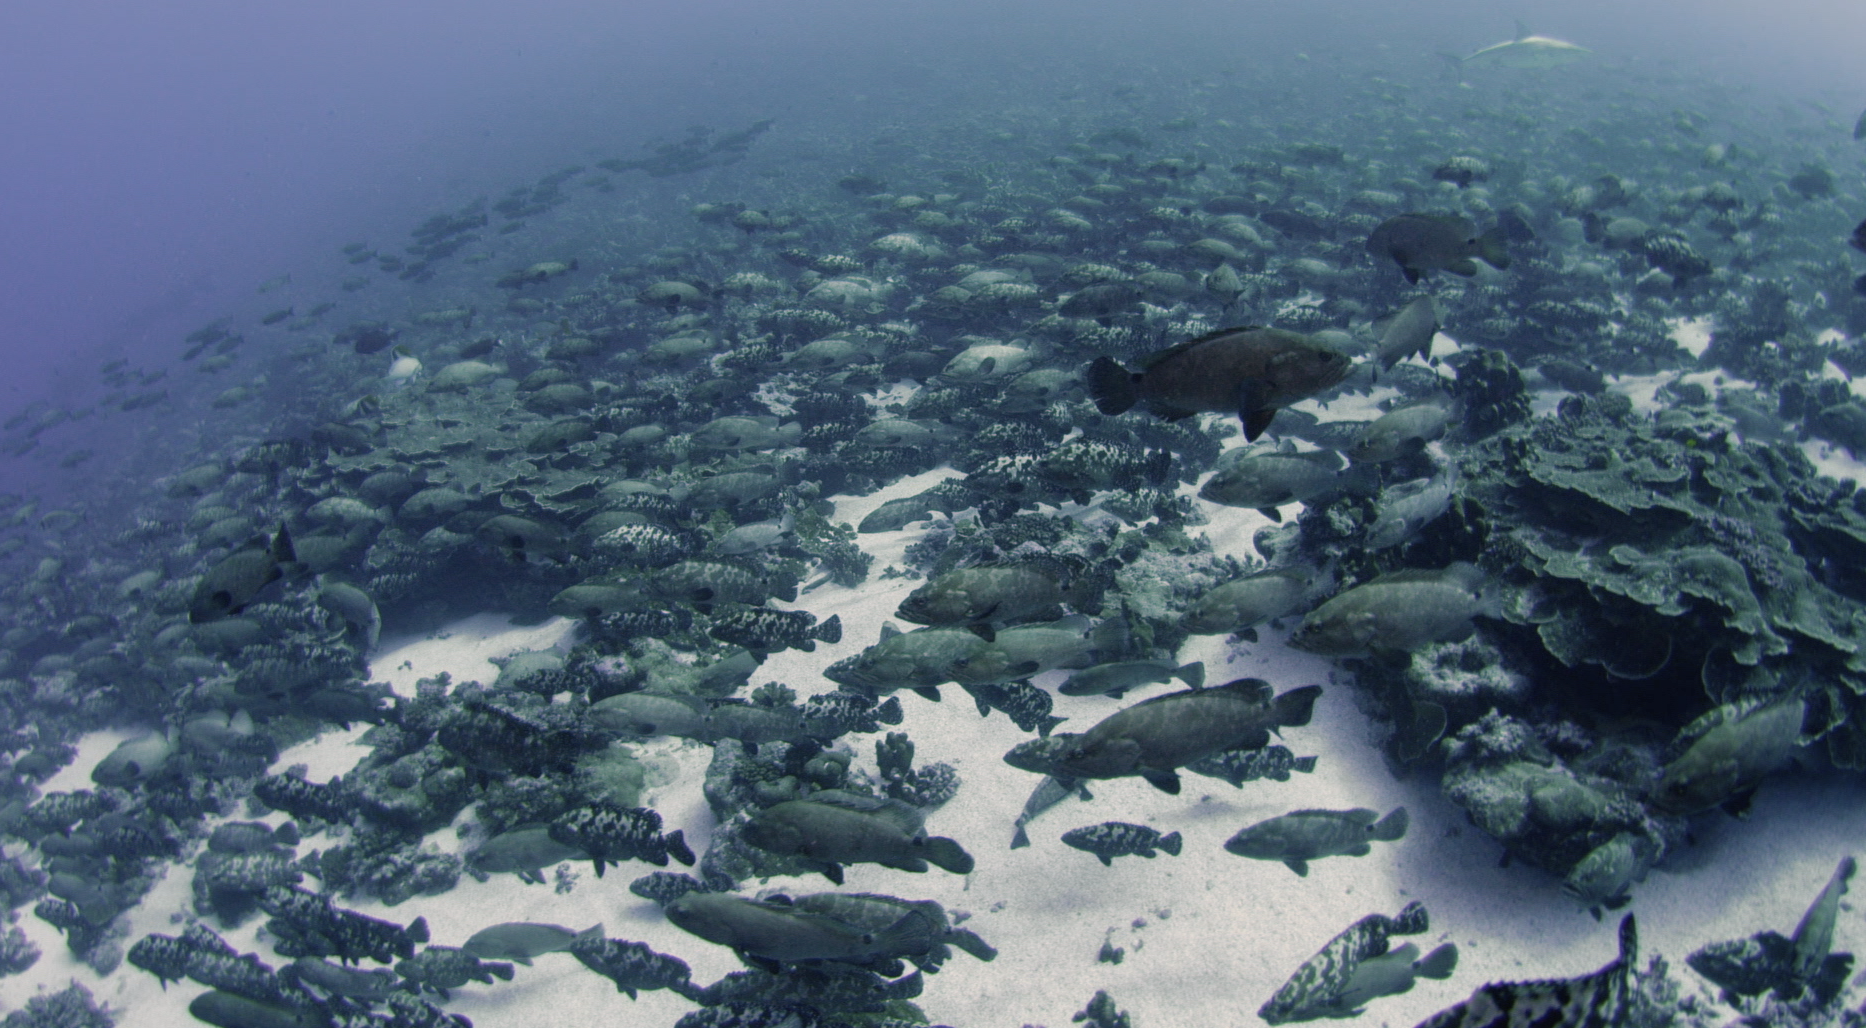 Marbled grouper spawning